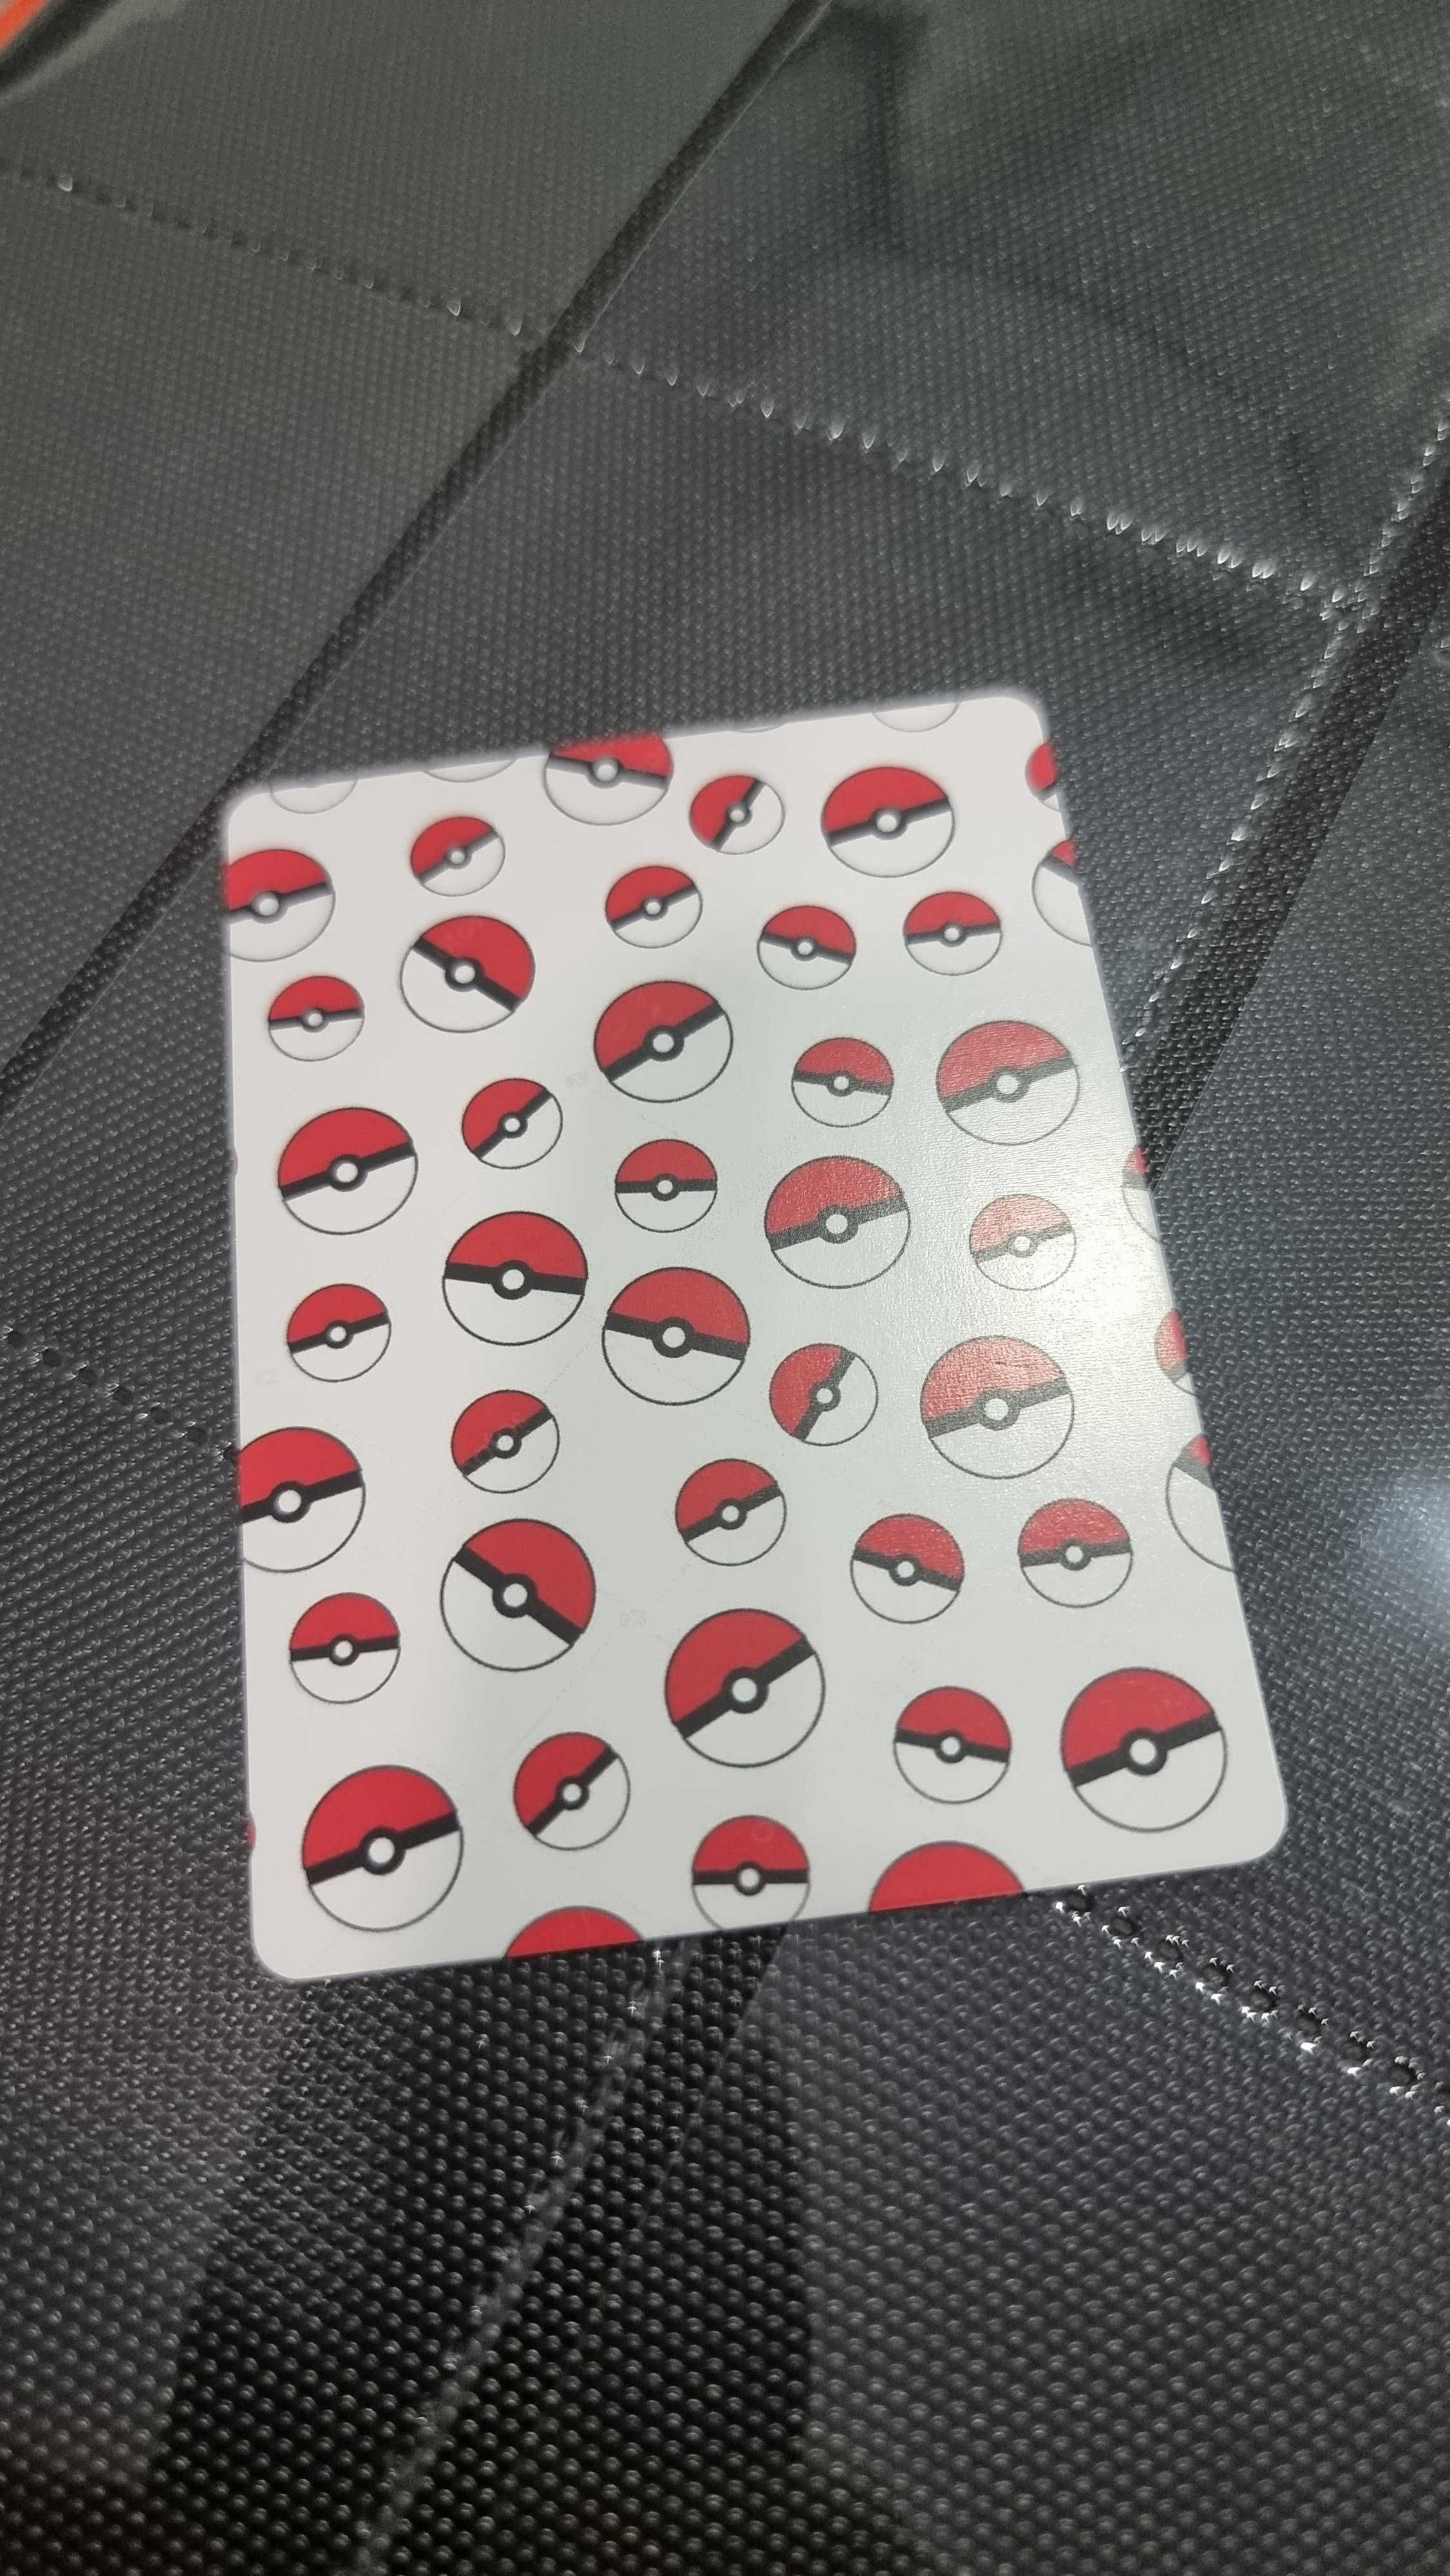 Custom Cards Pokemon TCG